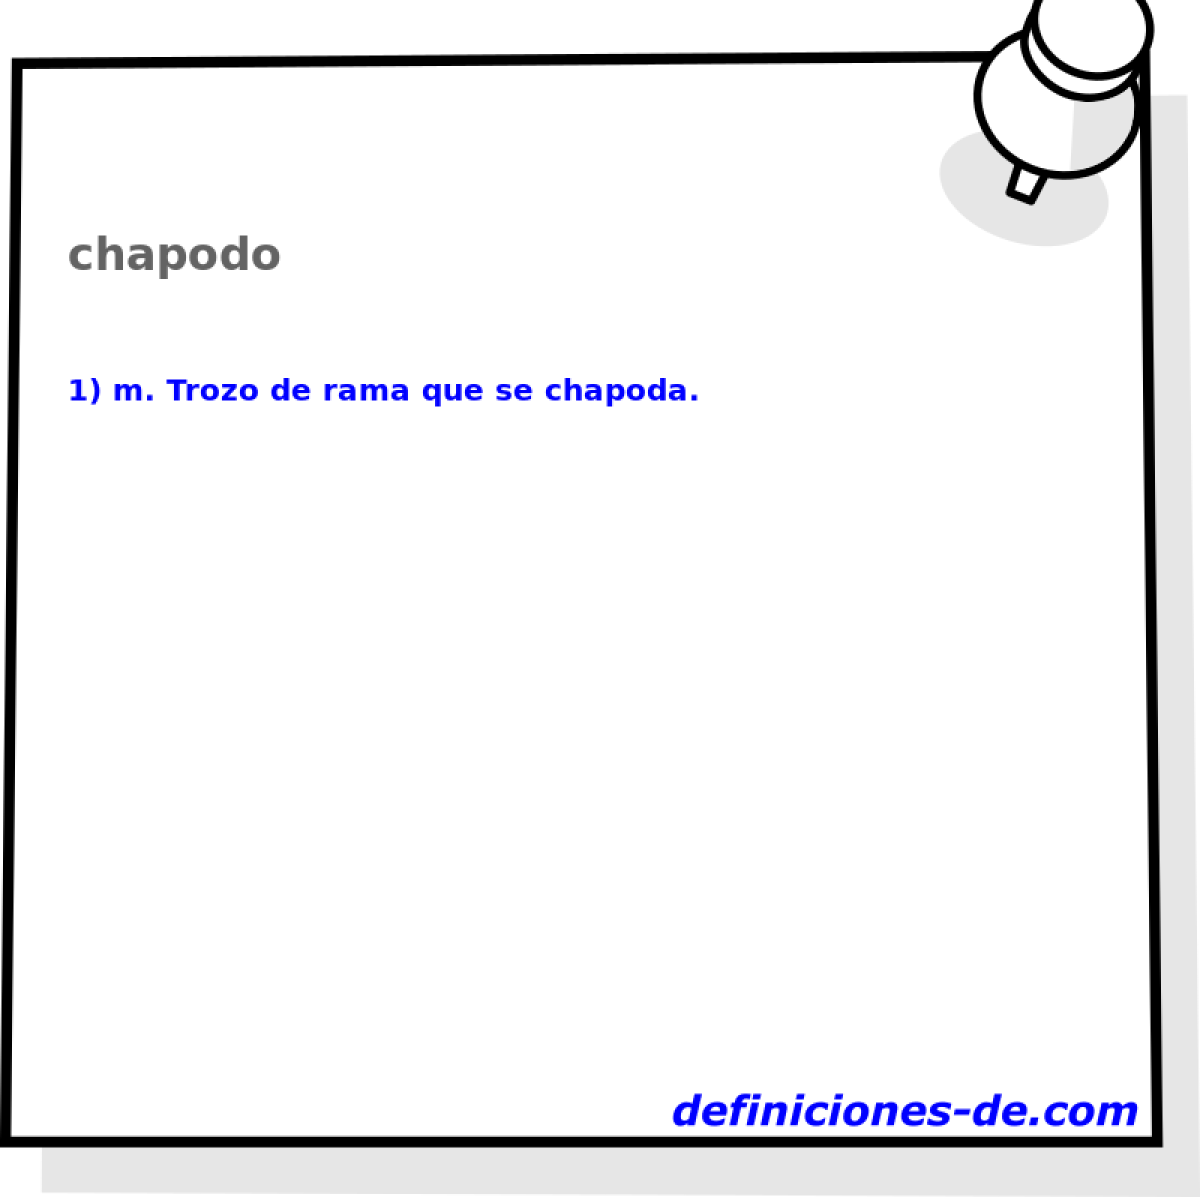 chapodo 